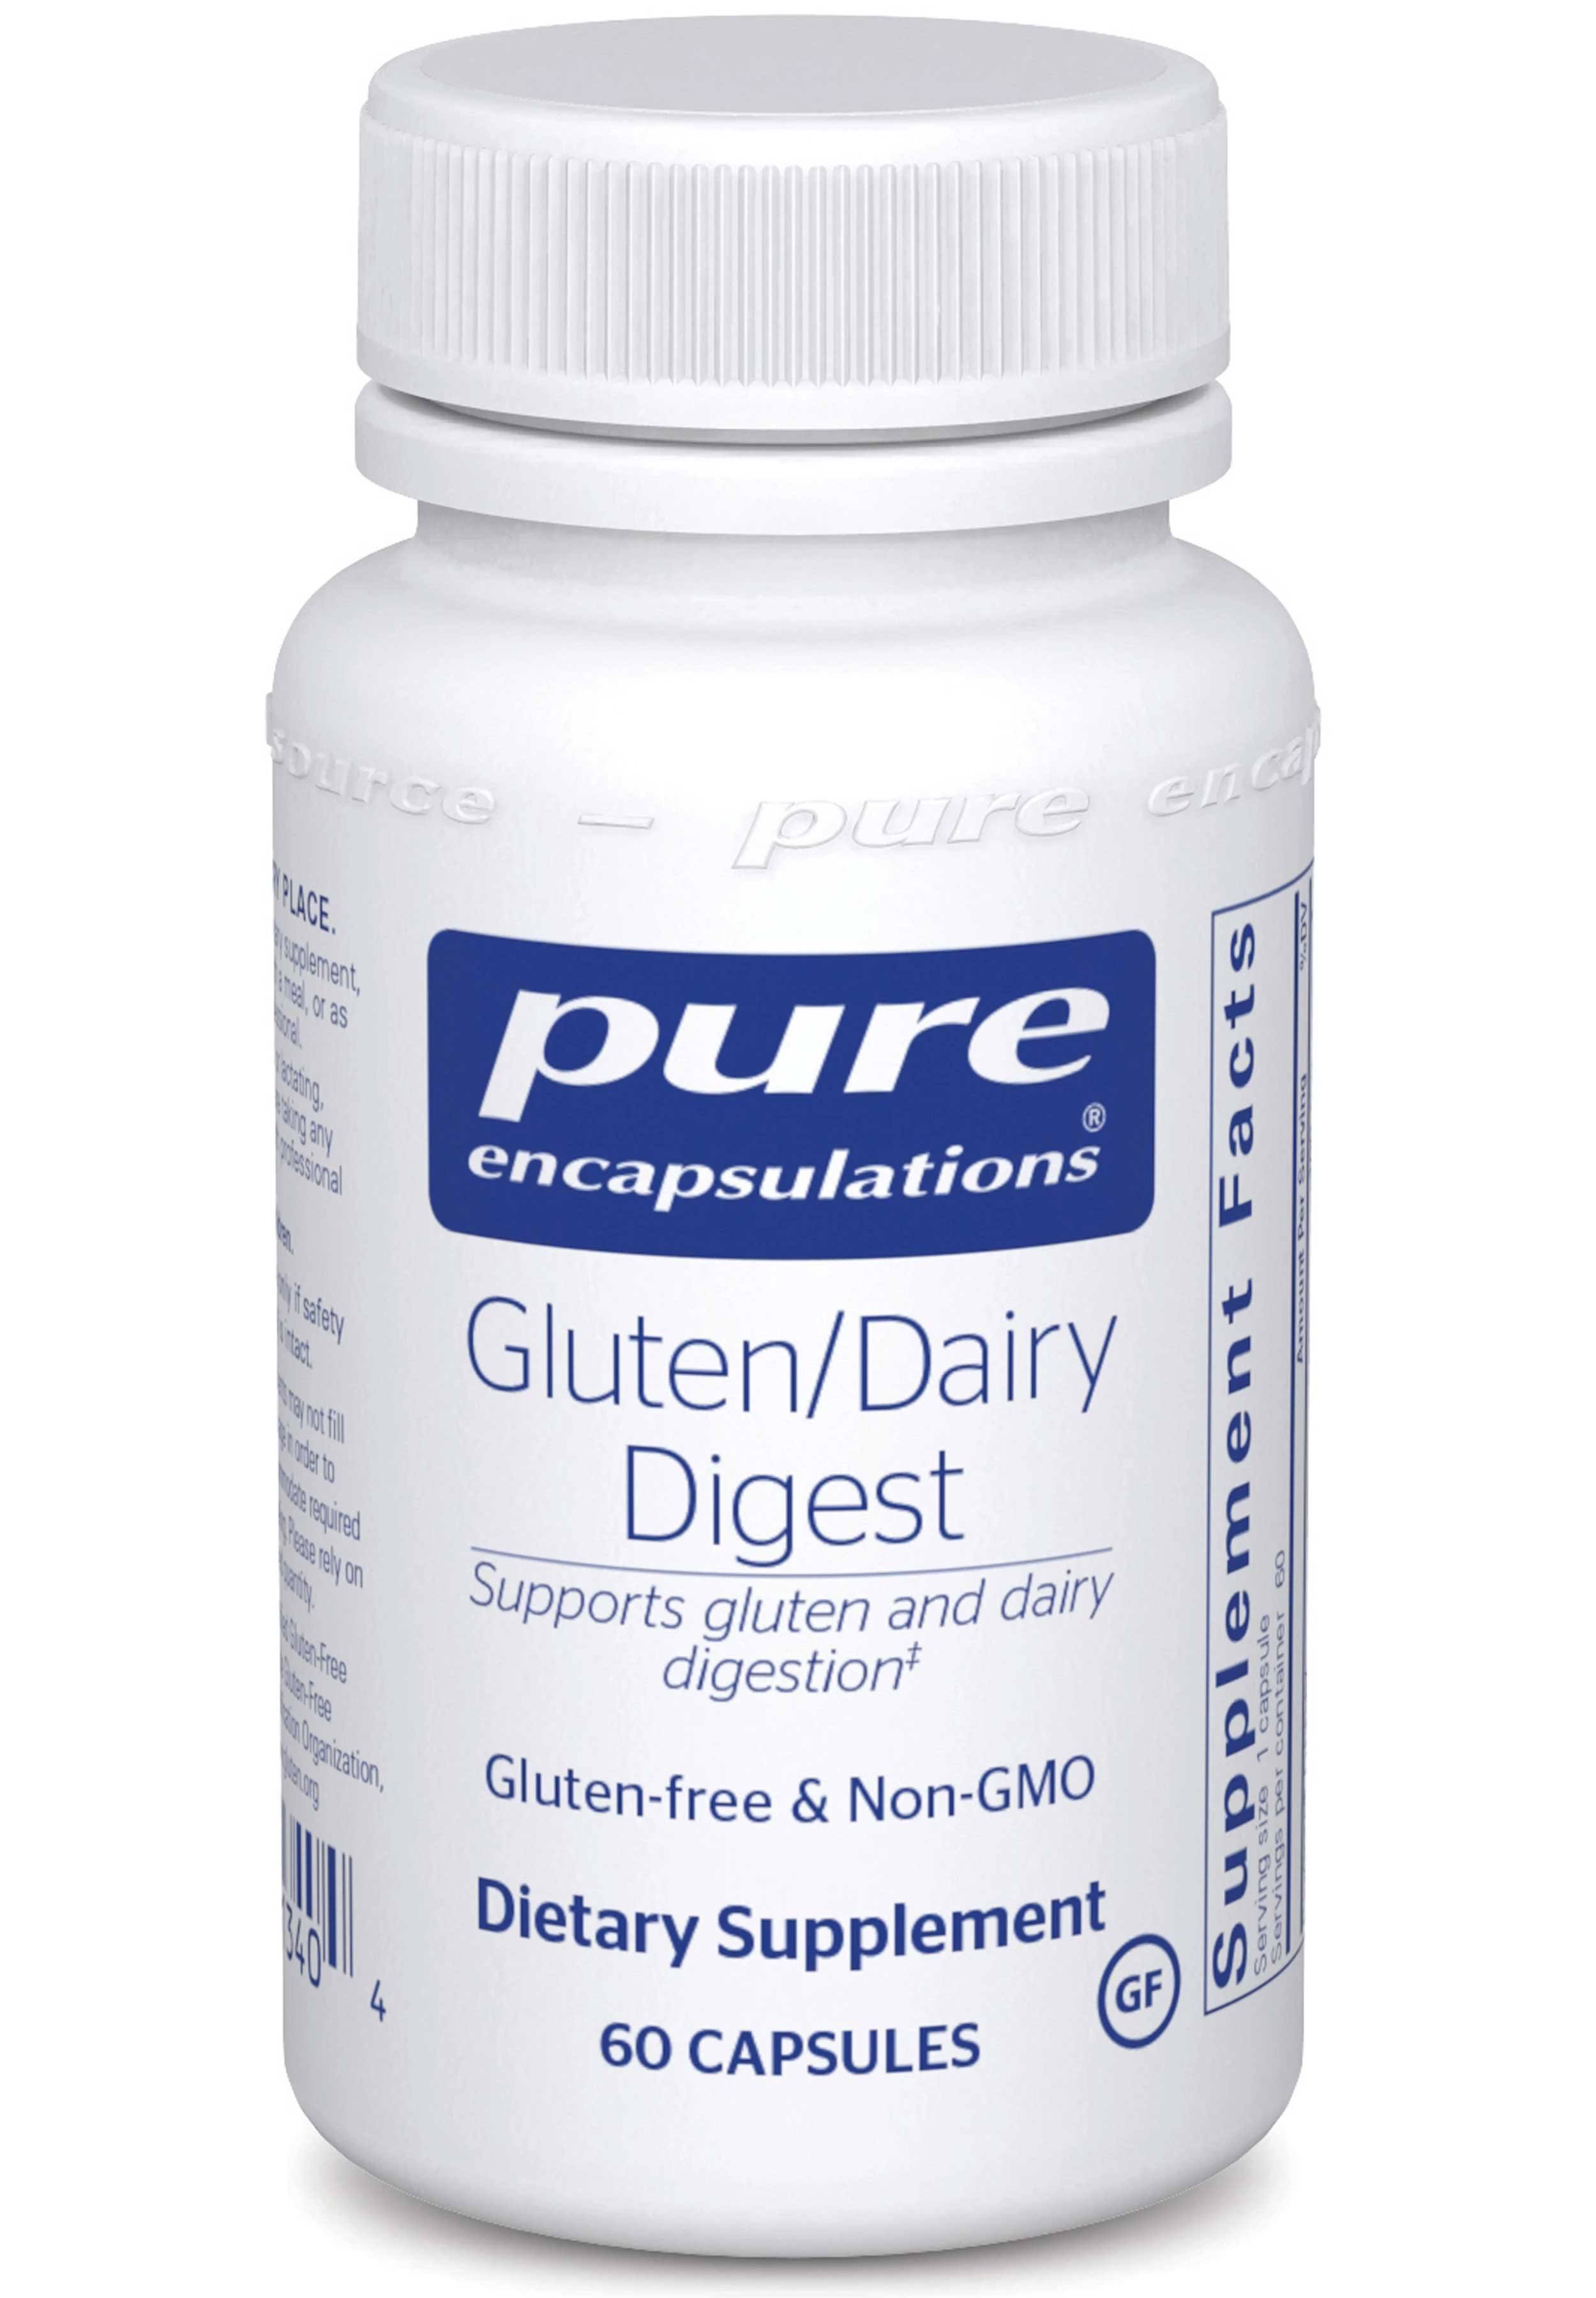 Pure Encapsulations Gluten/Dairy Digest - 60 Capsules